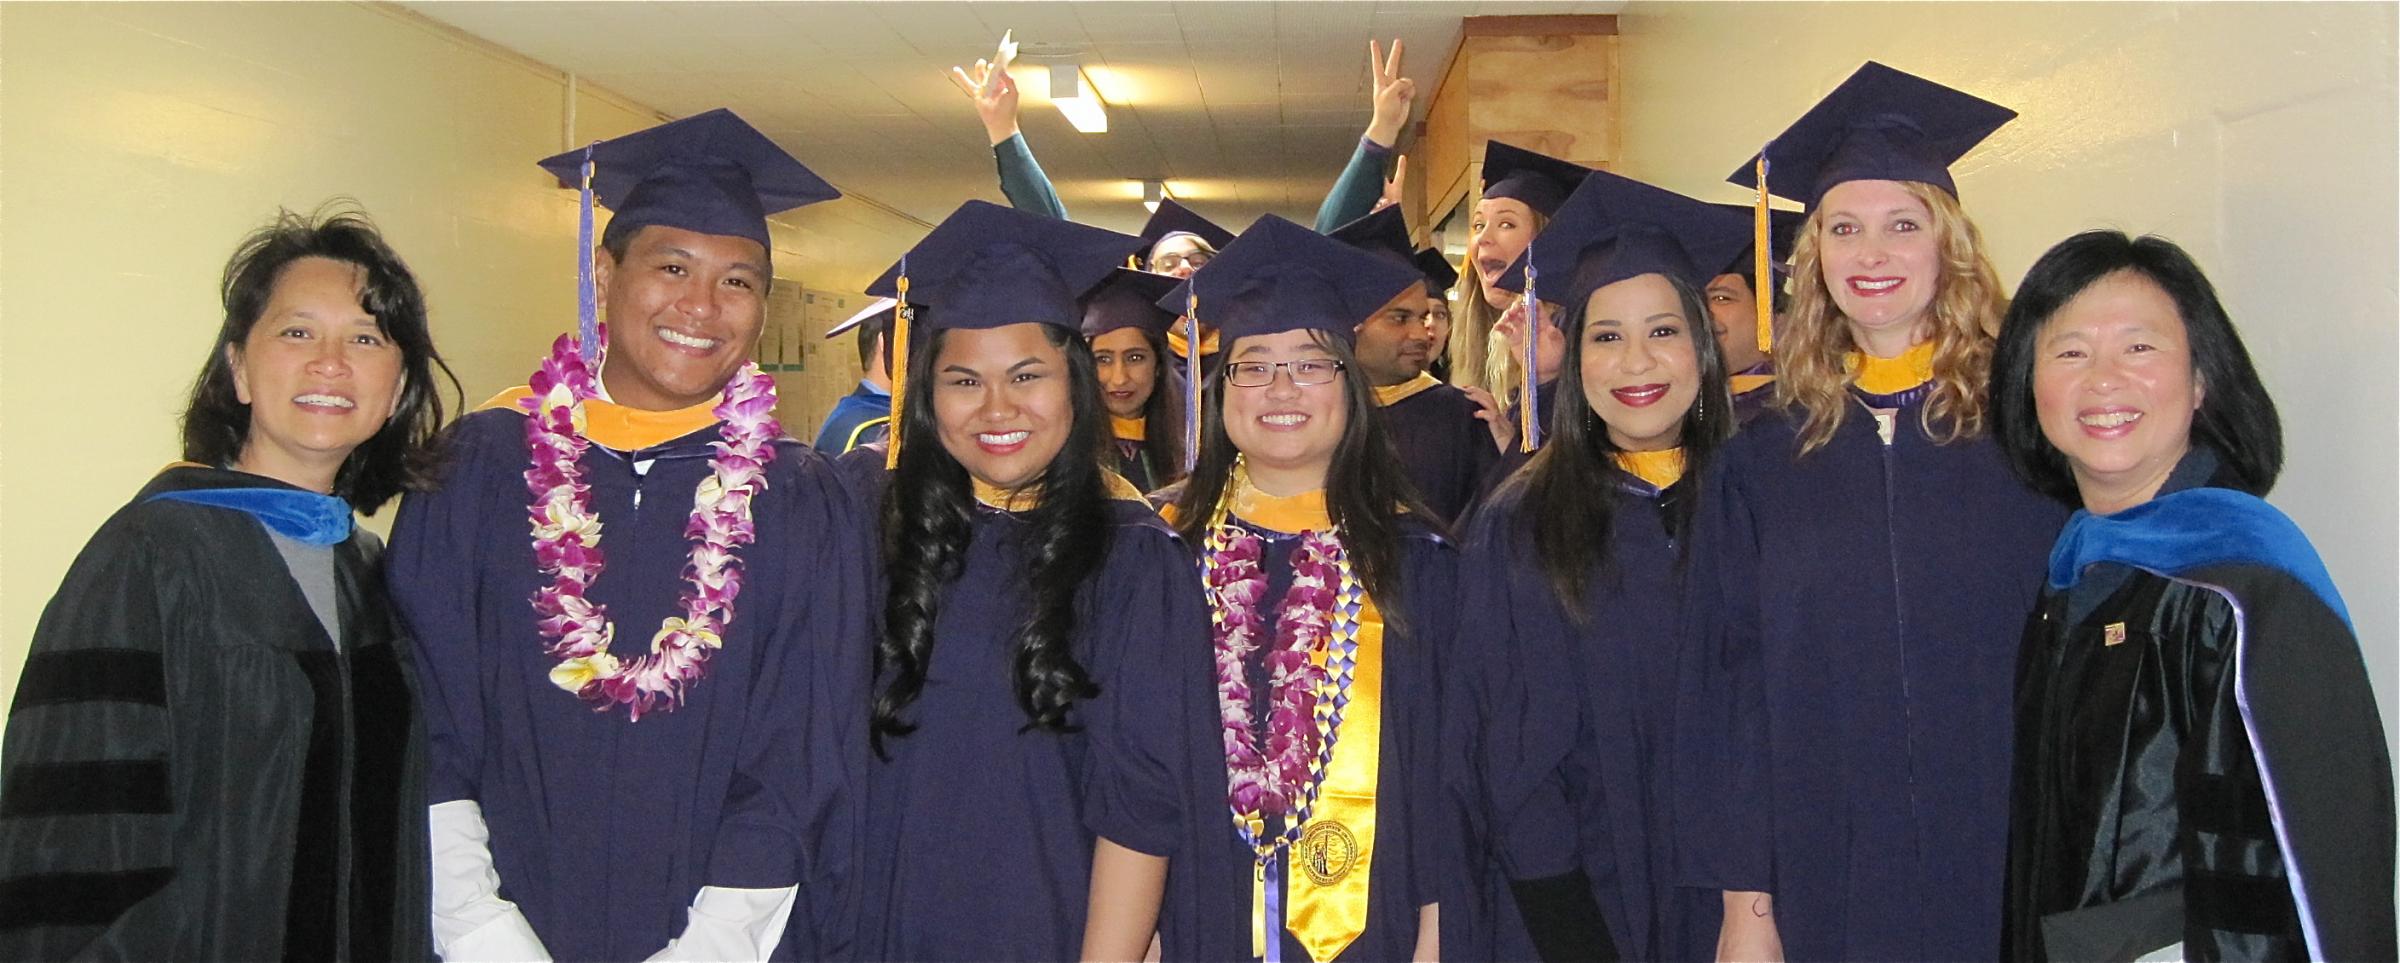 Cohort 3 graduates at Biology graduation, May 2014